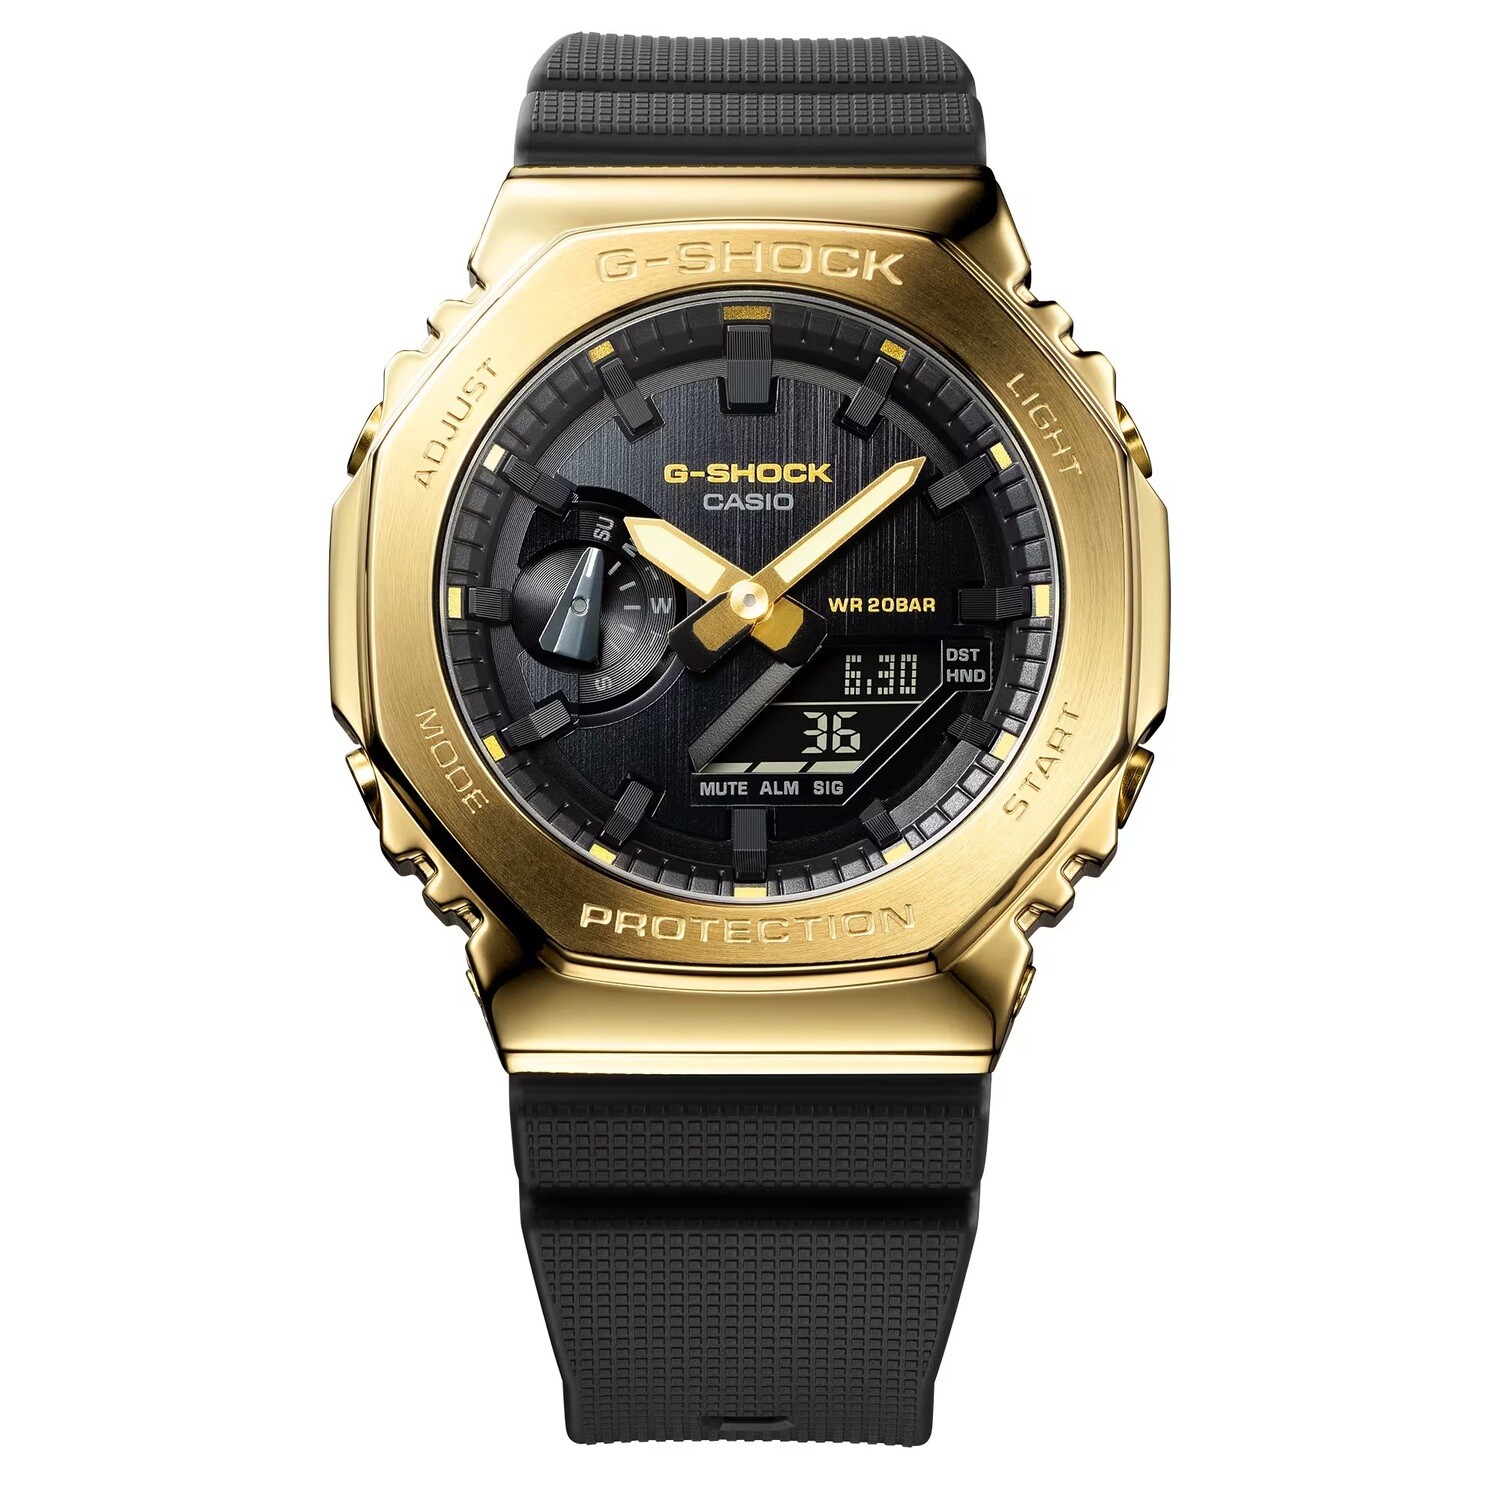 Casio G-Shock GM-2100G-1A9 Ana-Digi World Time 5 alarms shock resist sport men’s watch